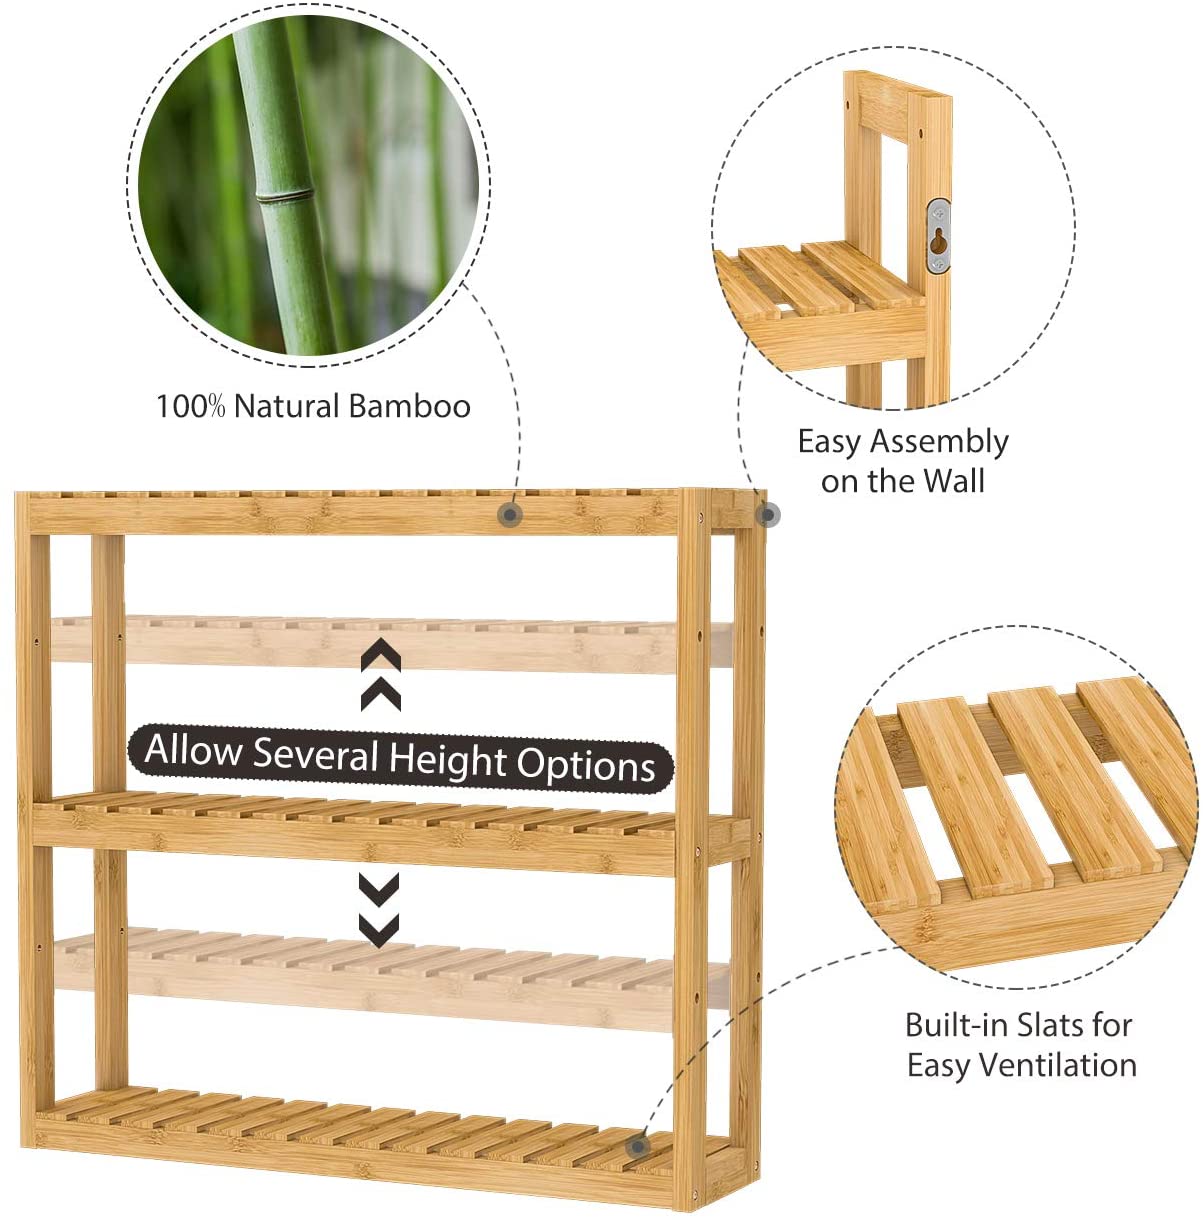 Bathroom Bamboo Shelf Organizer - 3 Tier Storage Shelf